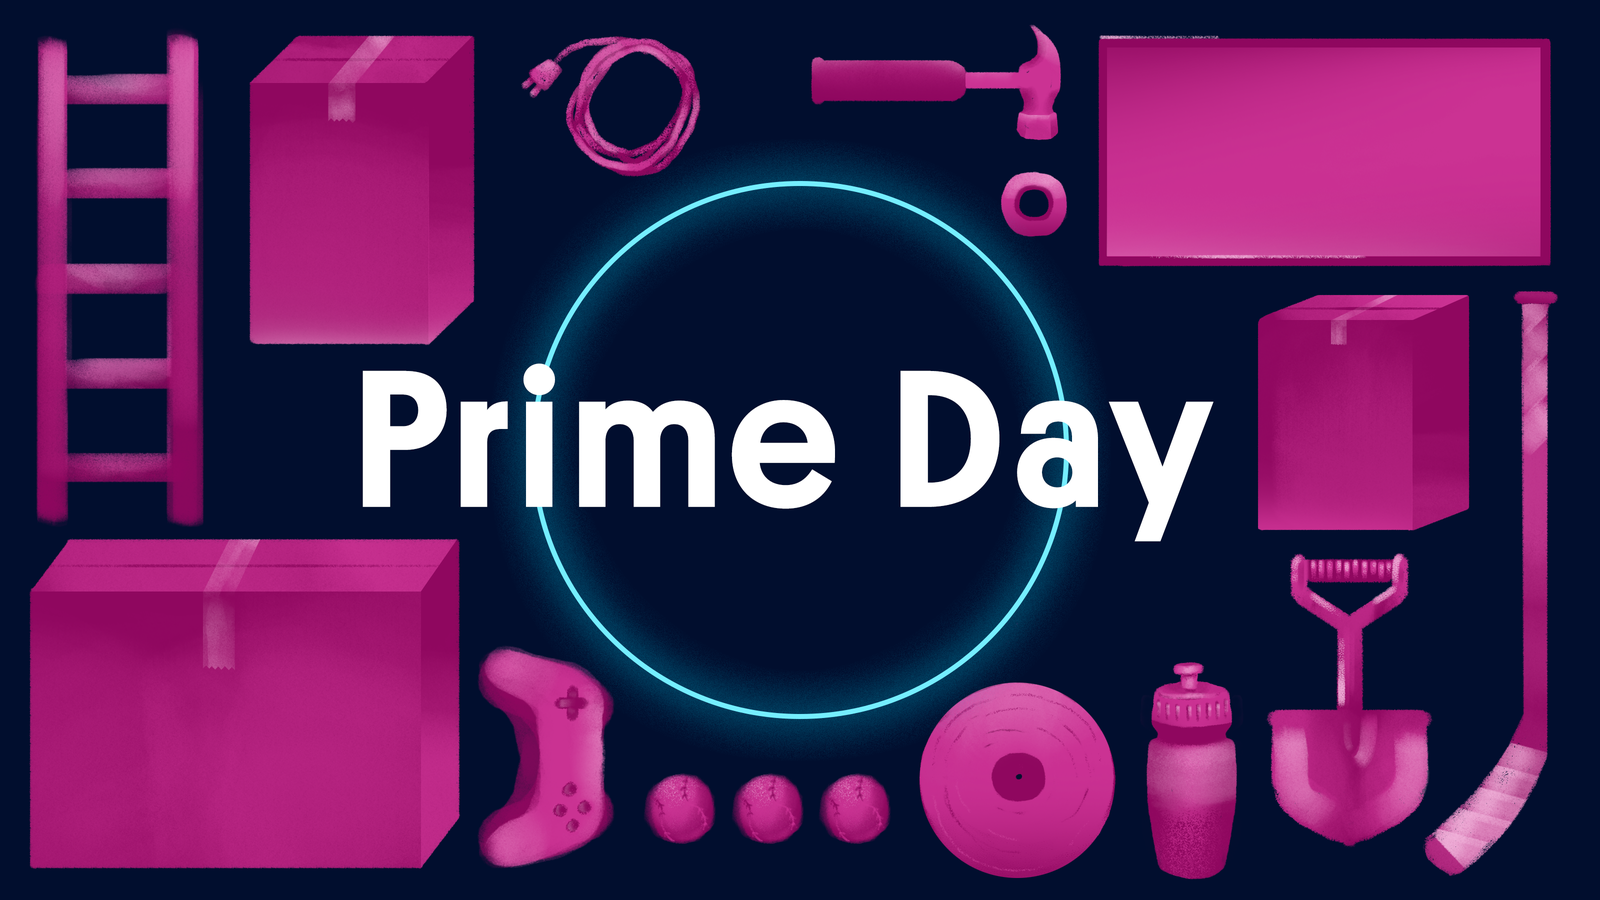 Prime Day 2019 - The Kinja Deals Hub